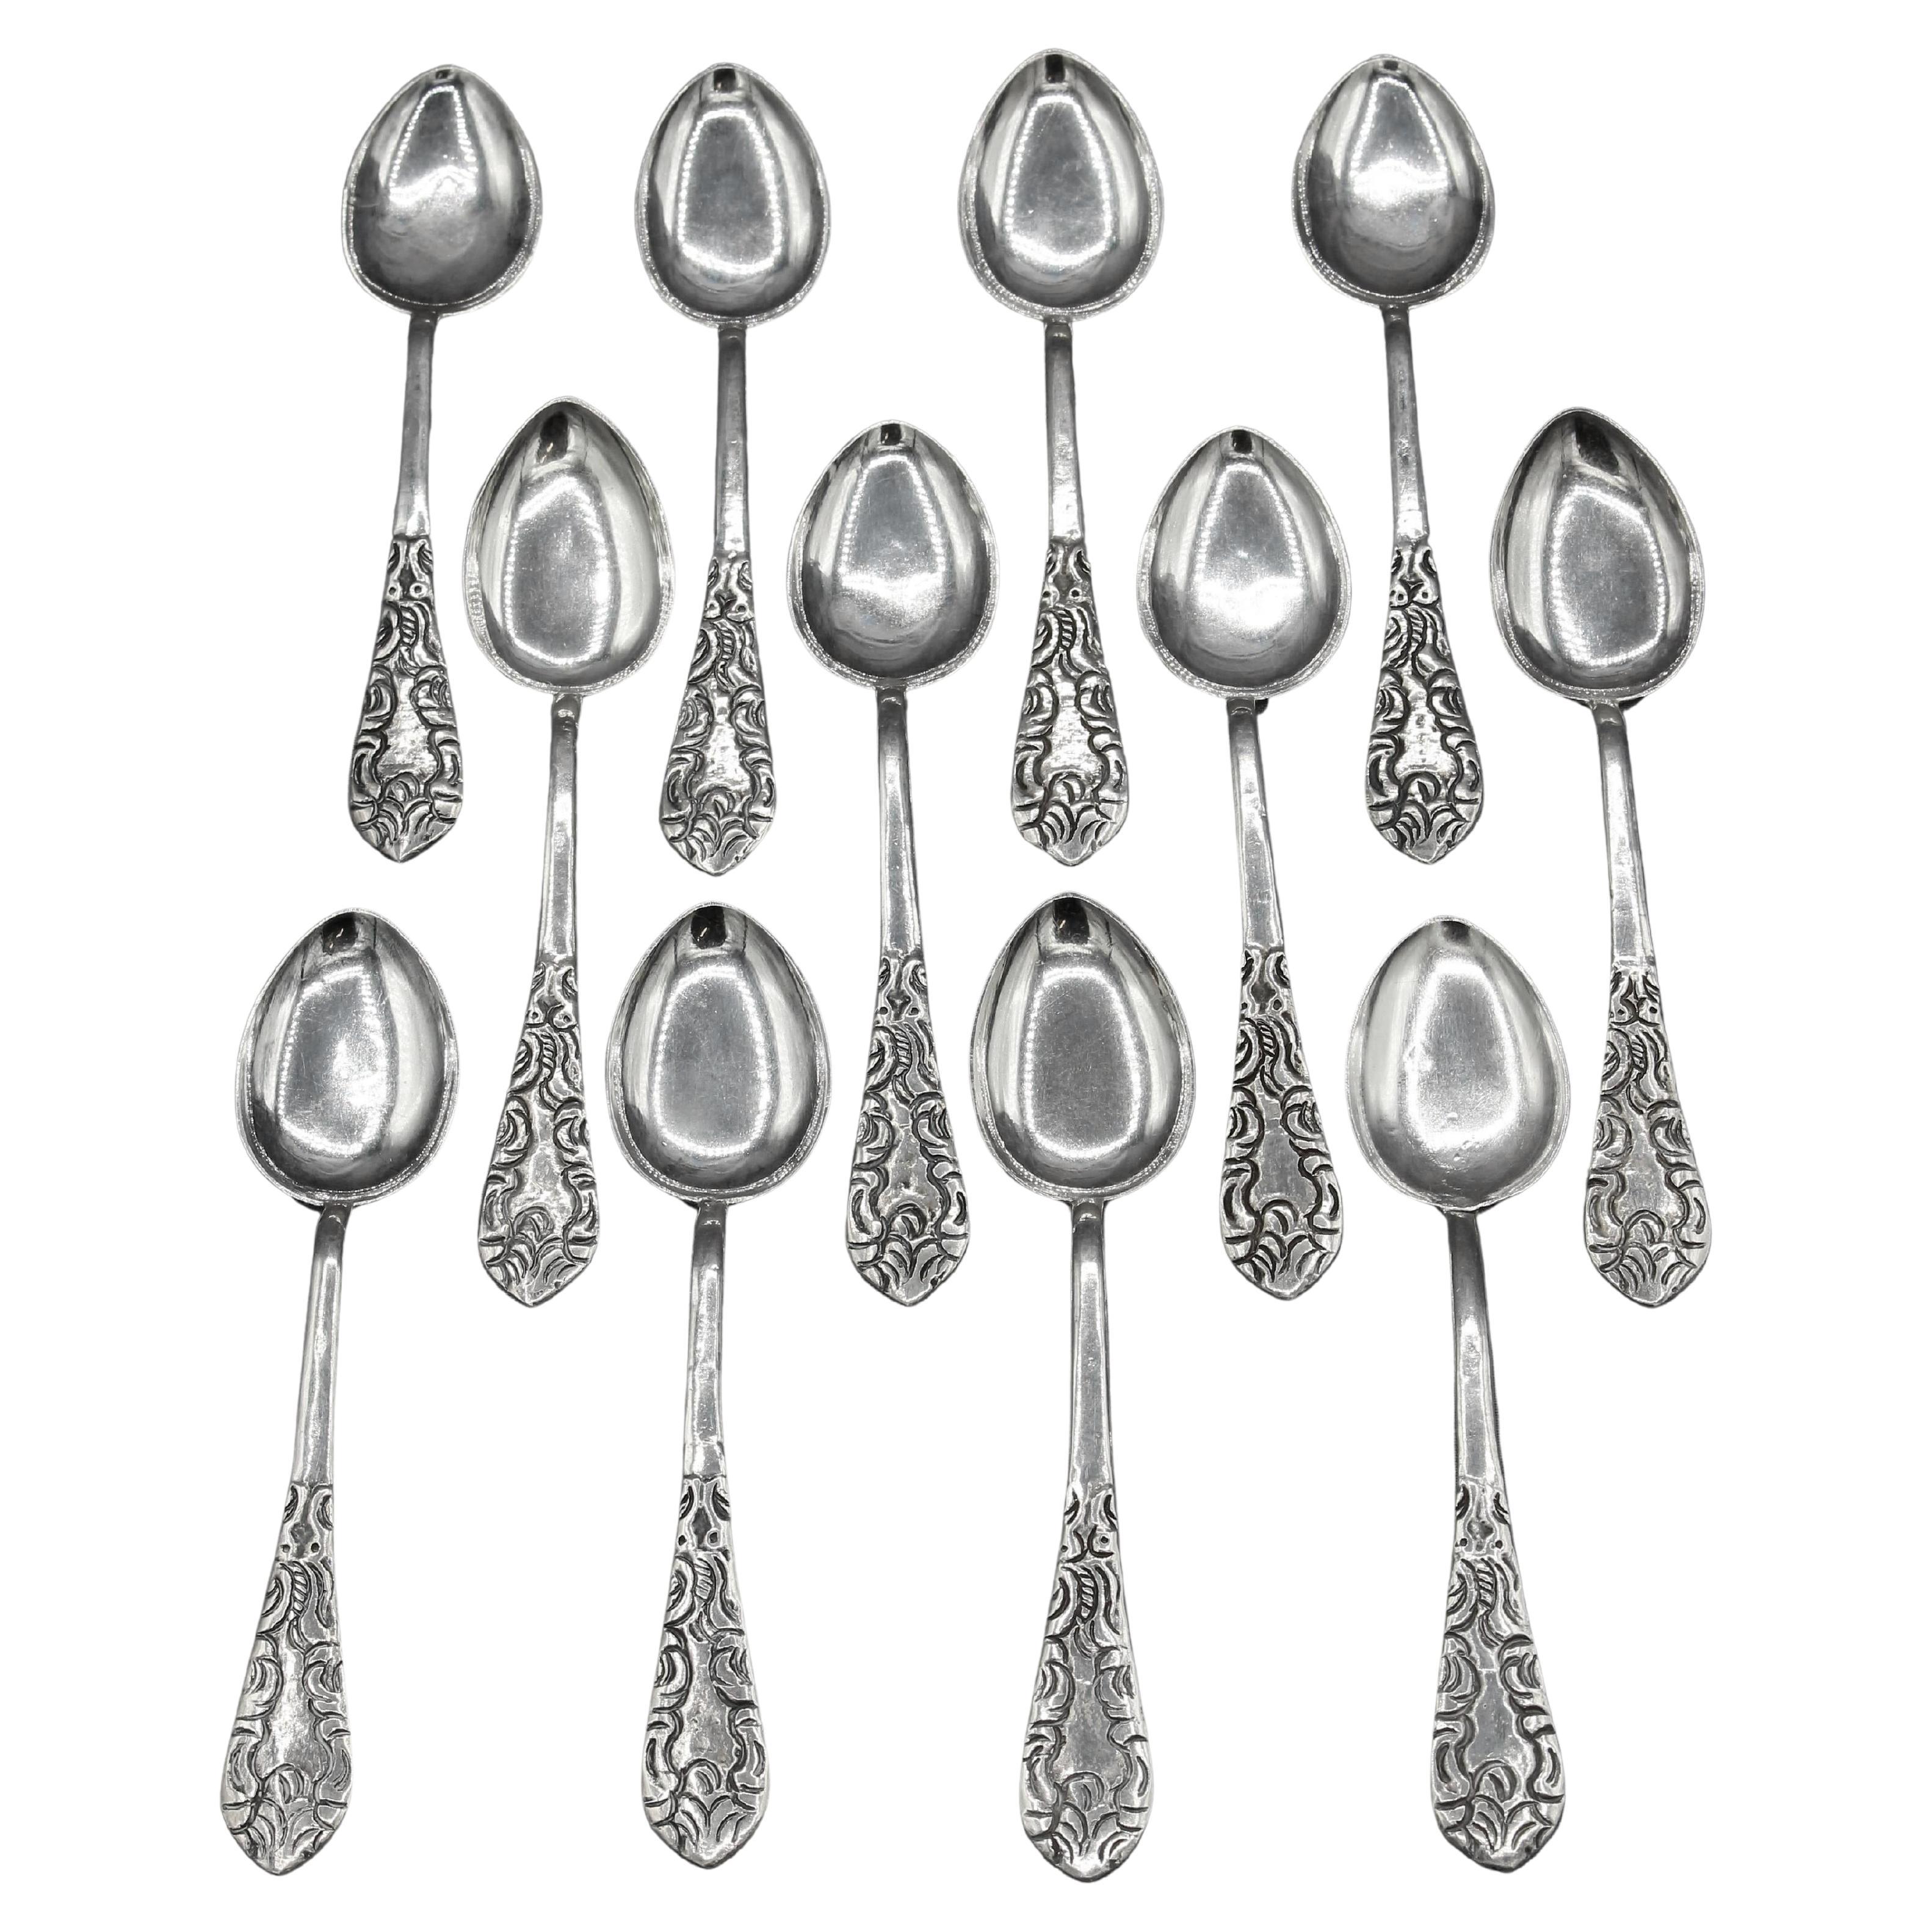 Circa 1930s Set of 12 Peruvian Sterling Silver Demitasse Spoons